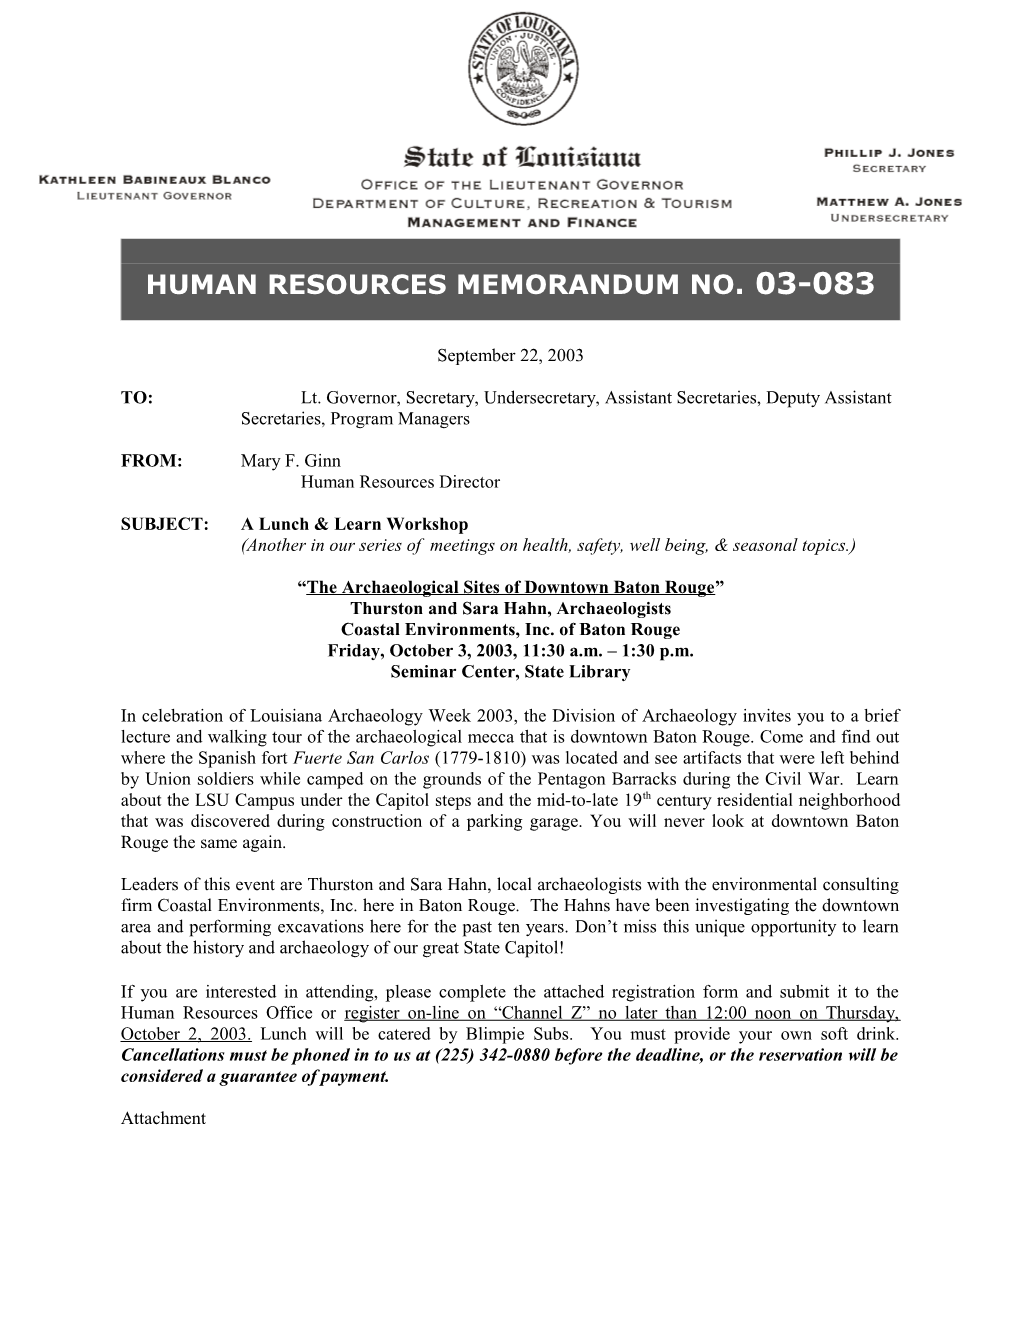 Human Resources Memorandum No. 03-083